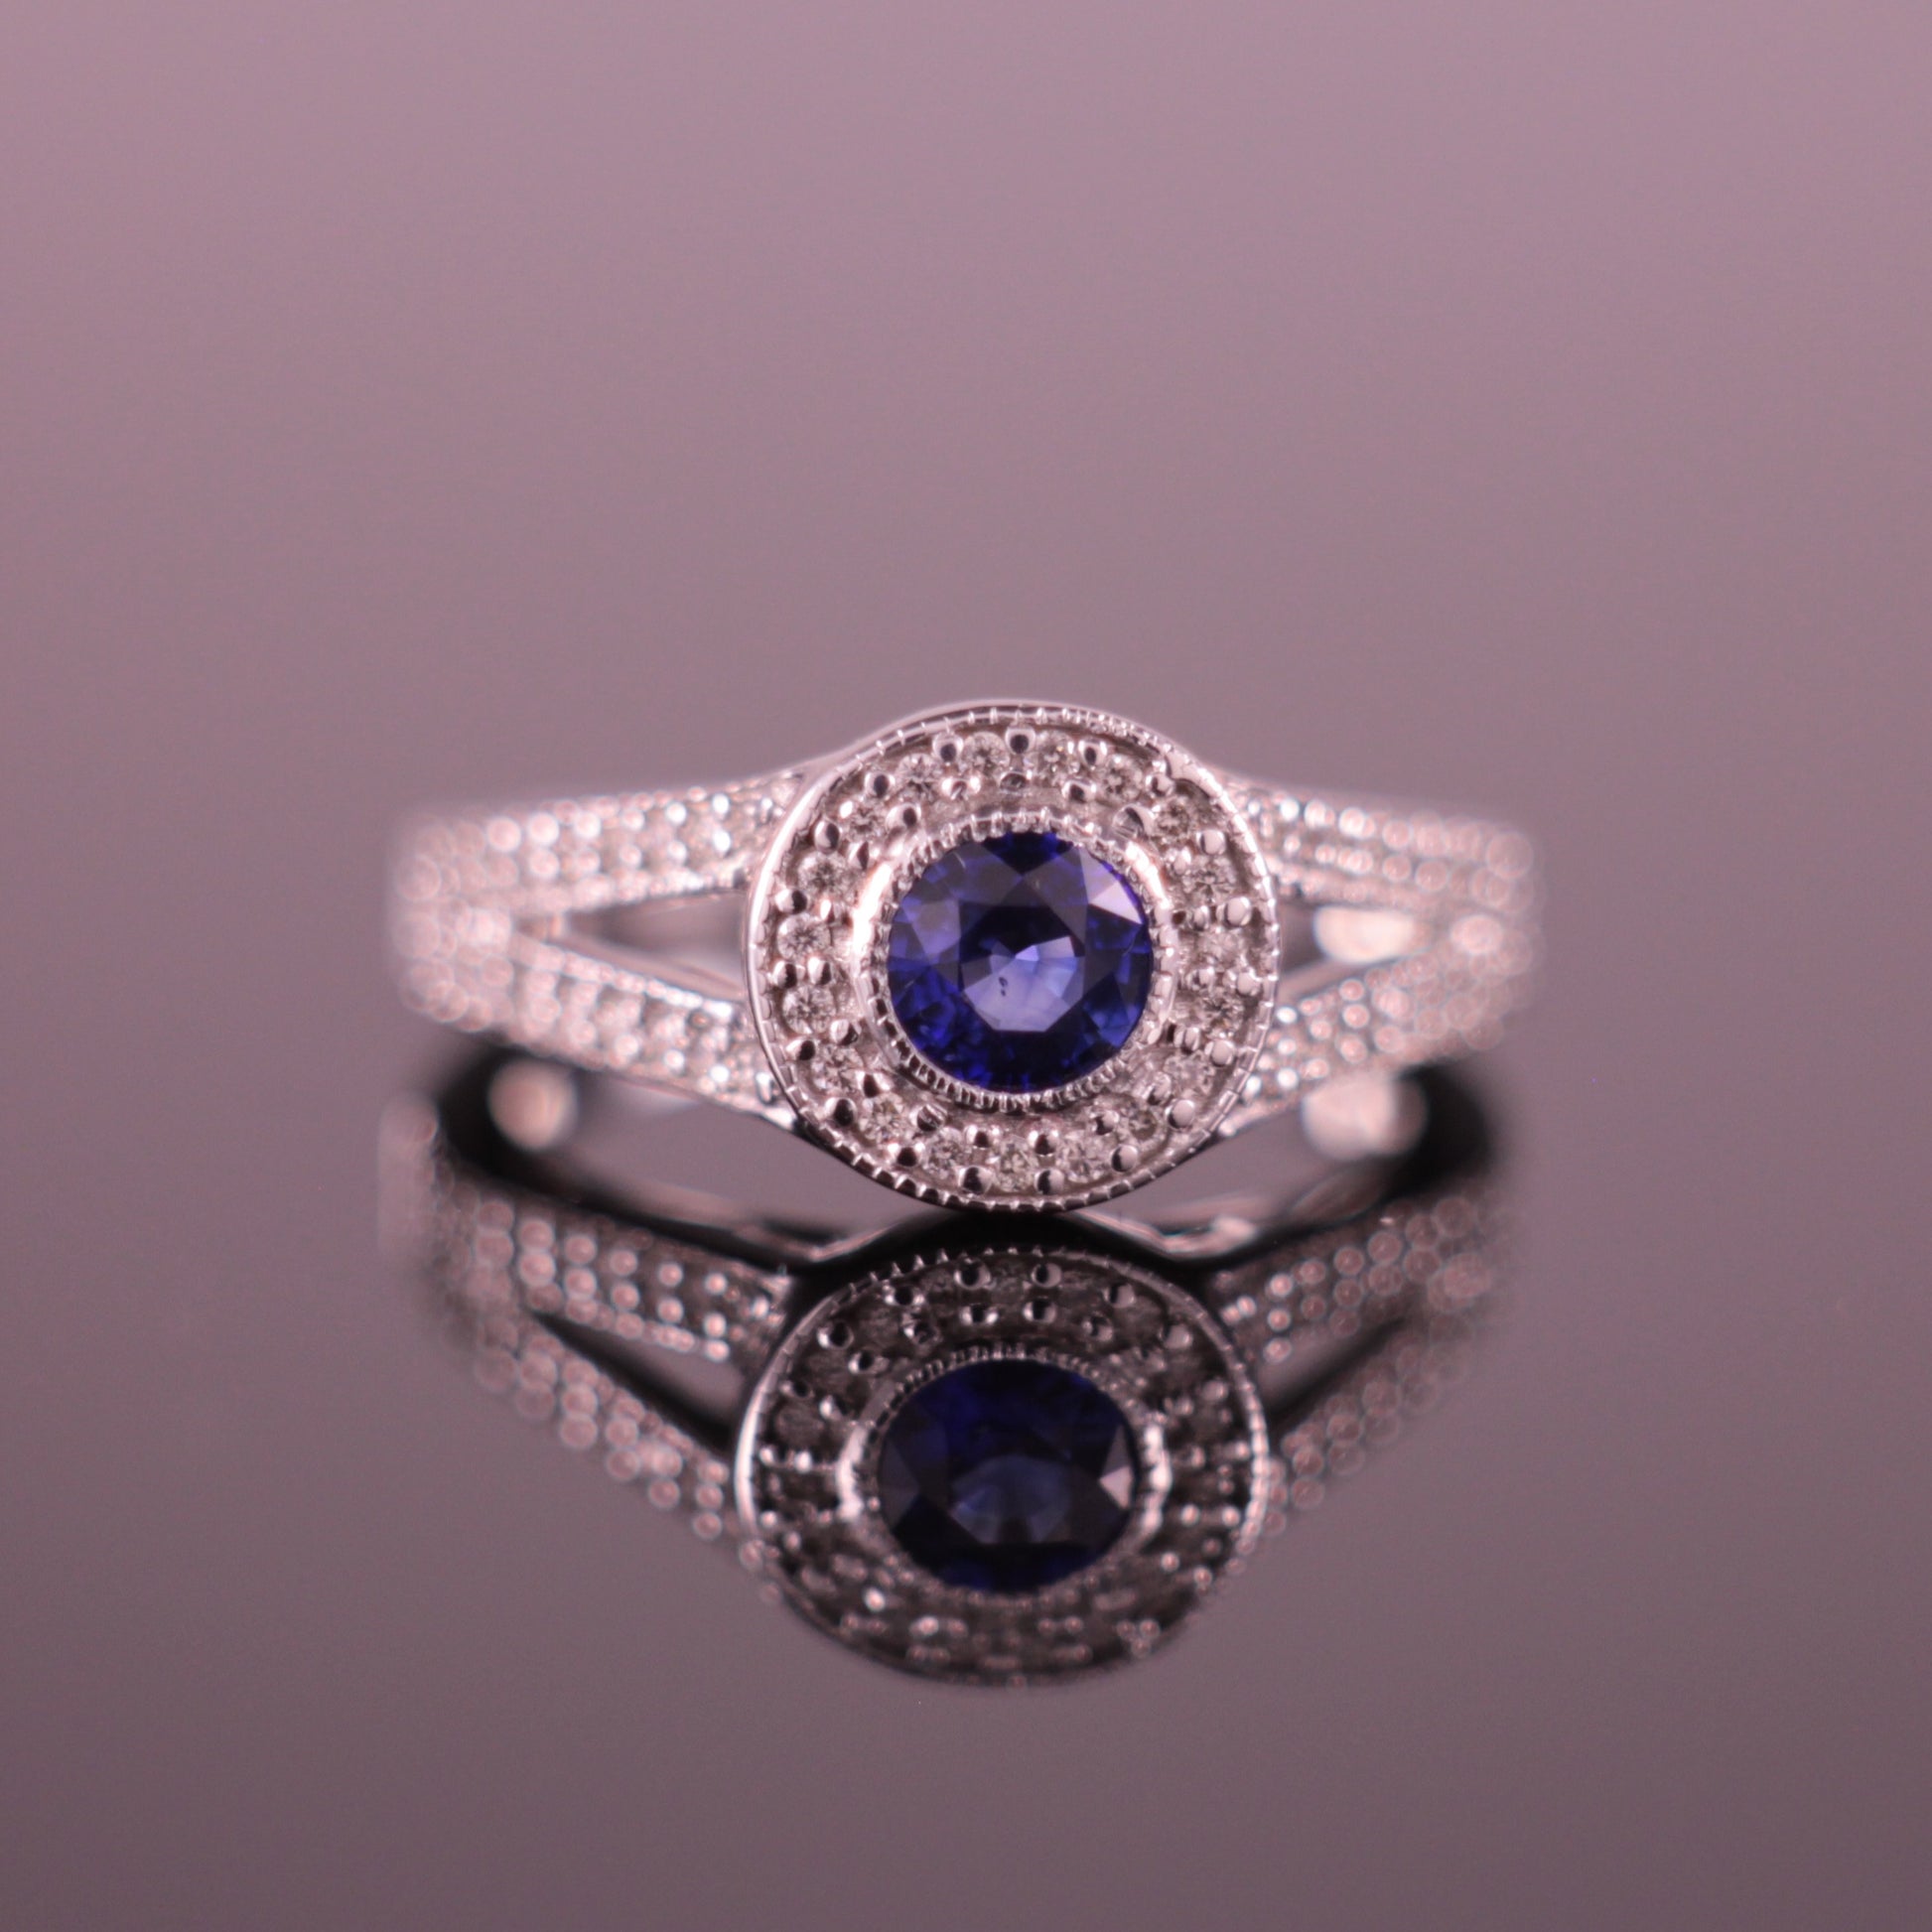 Sapphire & Diamond Halo Engagement Ring in 18ct White Gold Round Brilliant cut 0.42ct Sapphire & 0.28ct Diamond Halo